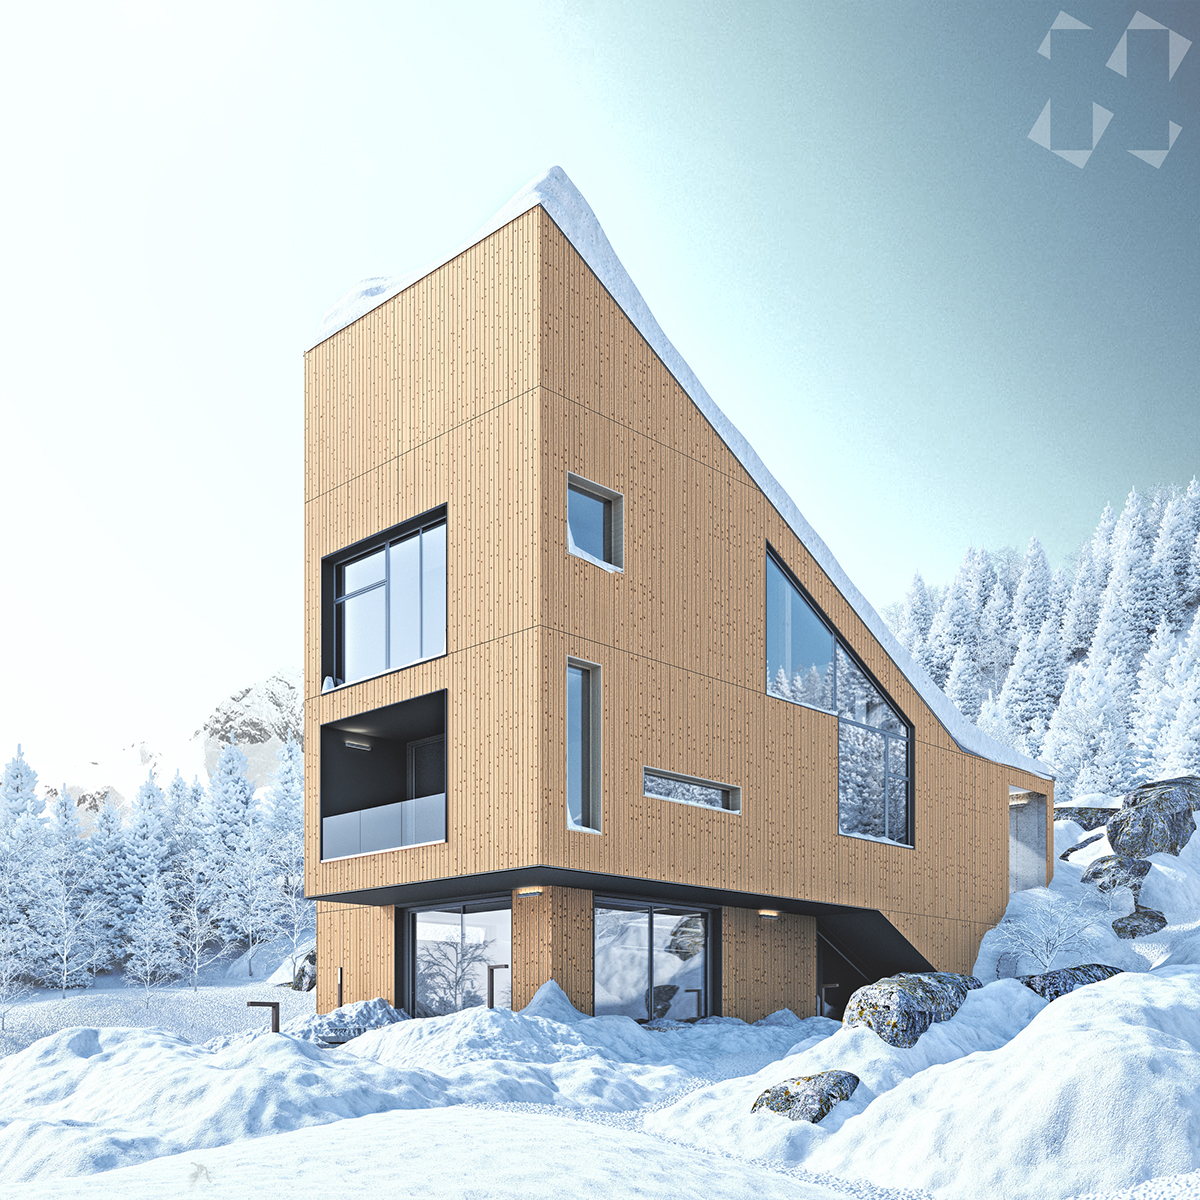 archviz exterior Render CG rendering postprocessing modelling 3D 3dsmax photoshop vray design wood cabin house